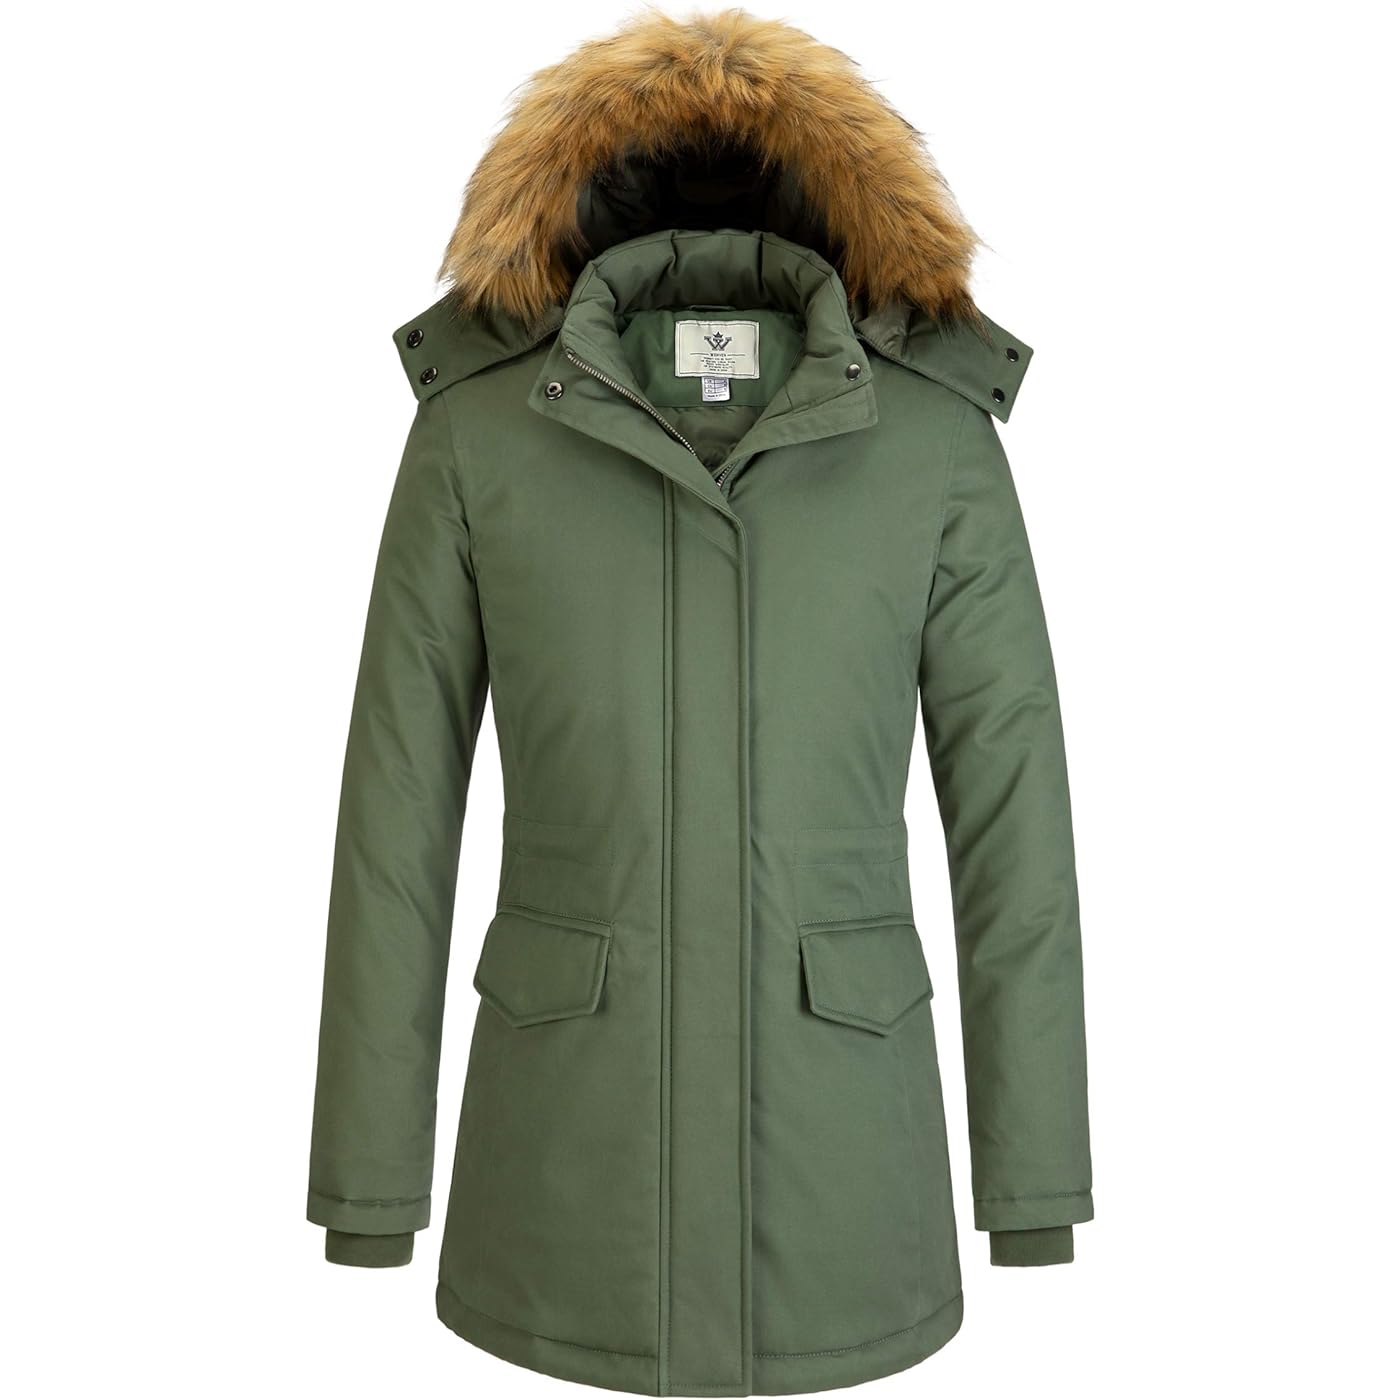 Куртка WenVen Winter Thickened Warm Mid Length Windproof and Waterproof With a Detachable Fur Hat, зеленый мужская зимняя куртка с капюшоном камуфляжная утолщенная теплая парка с лентами в стиле хип хоп уличная одежда abz521 2022